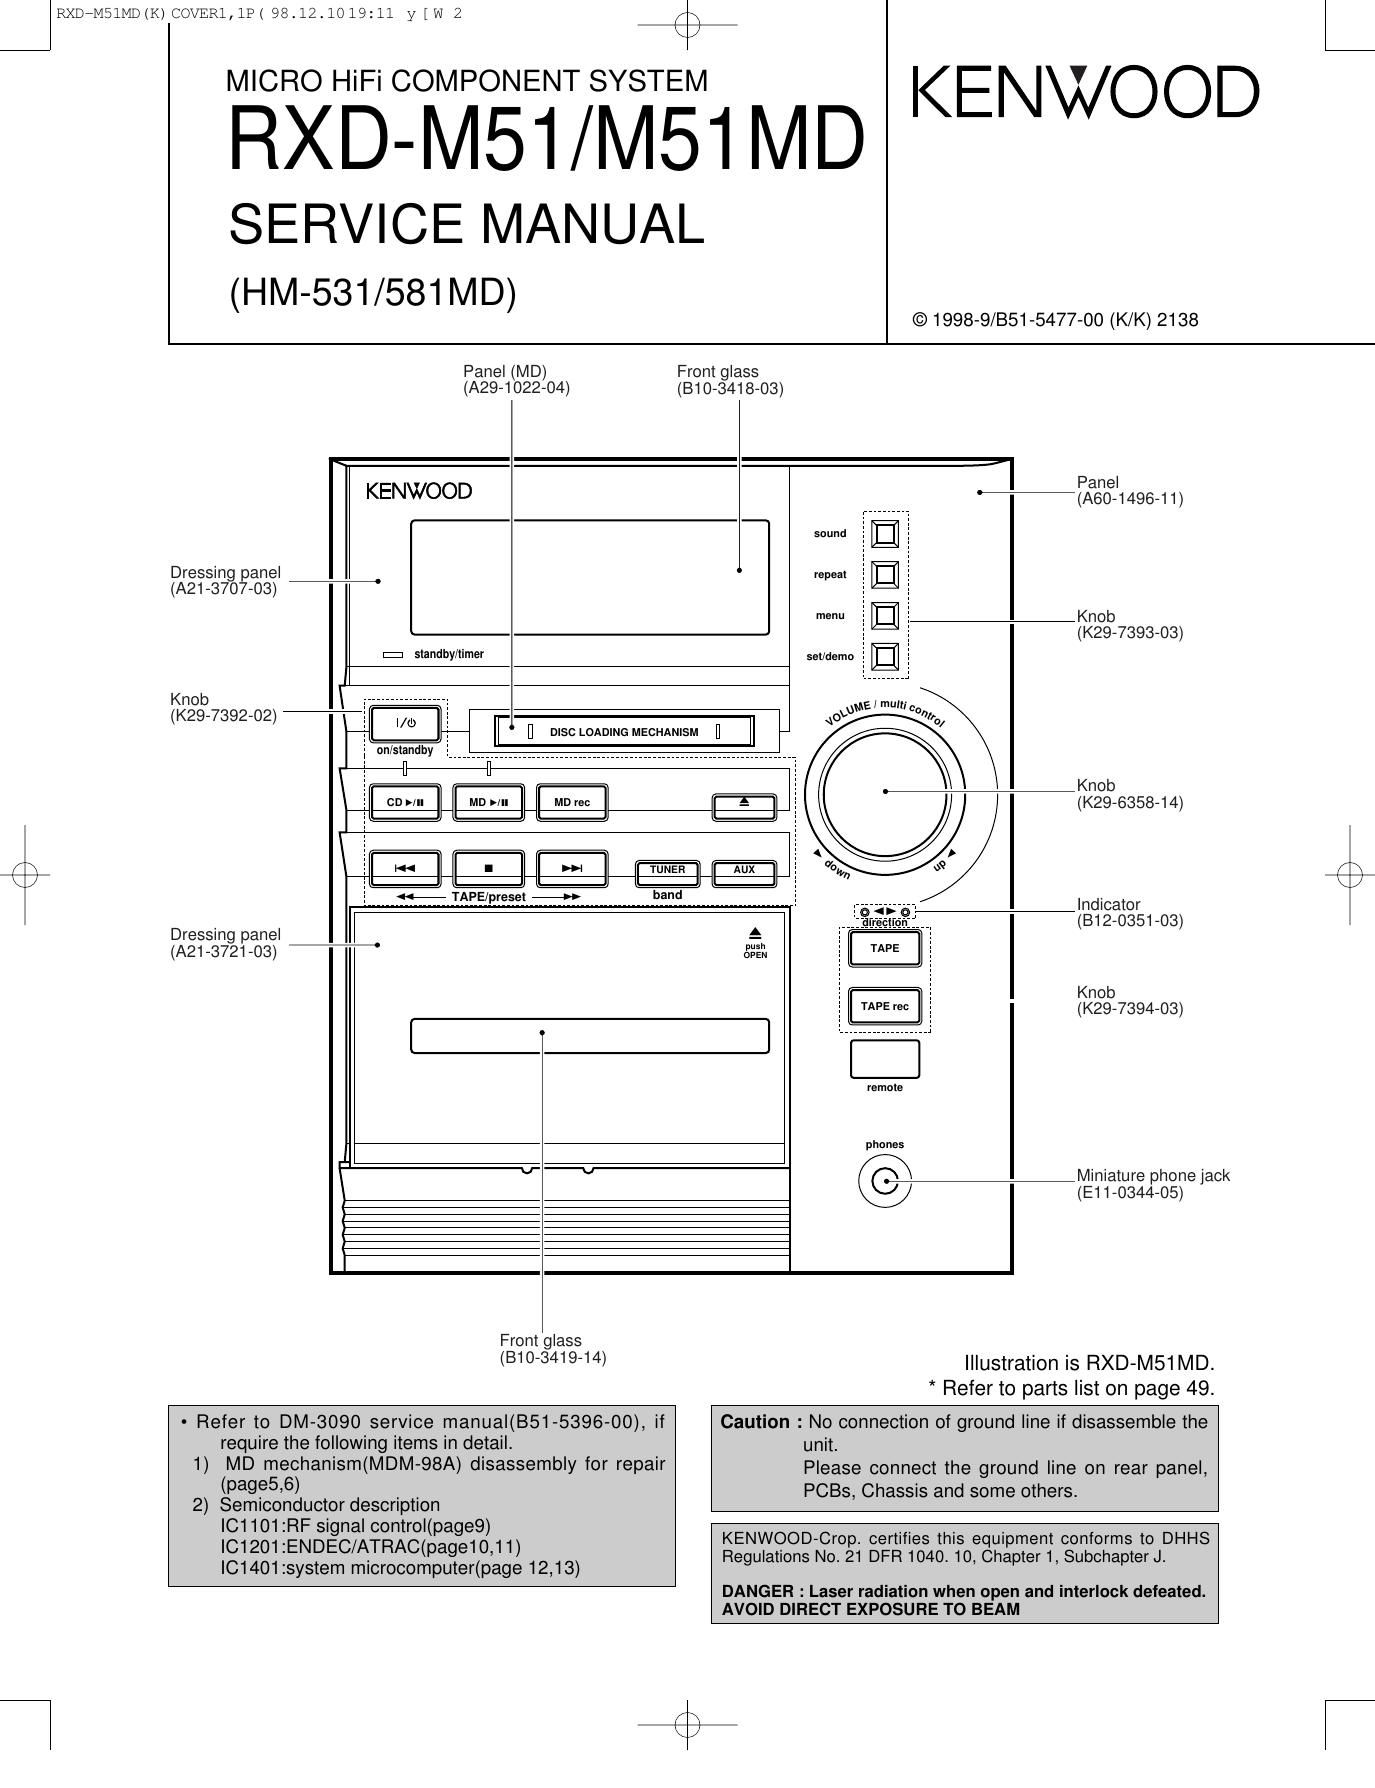 Kenwood HM 581 MD Service Manual